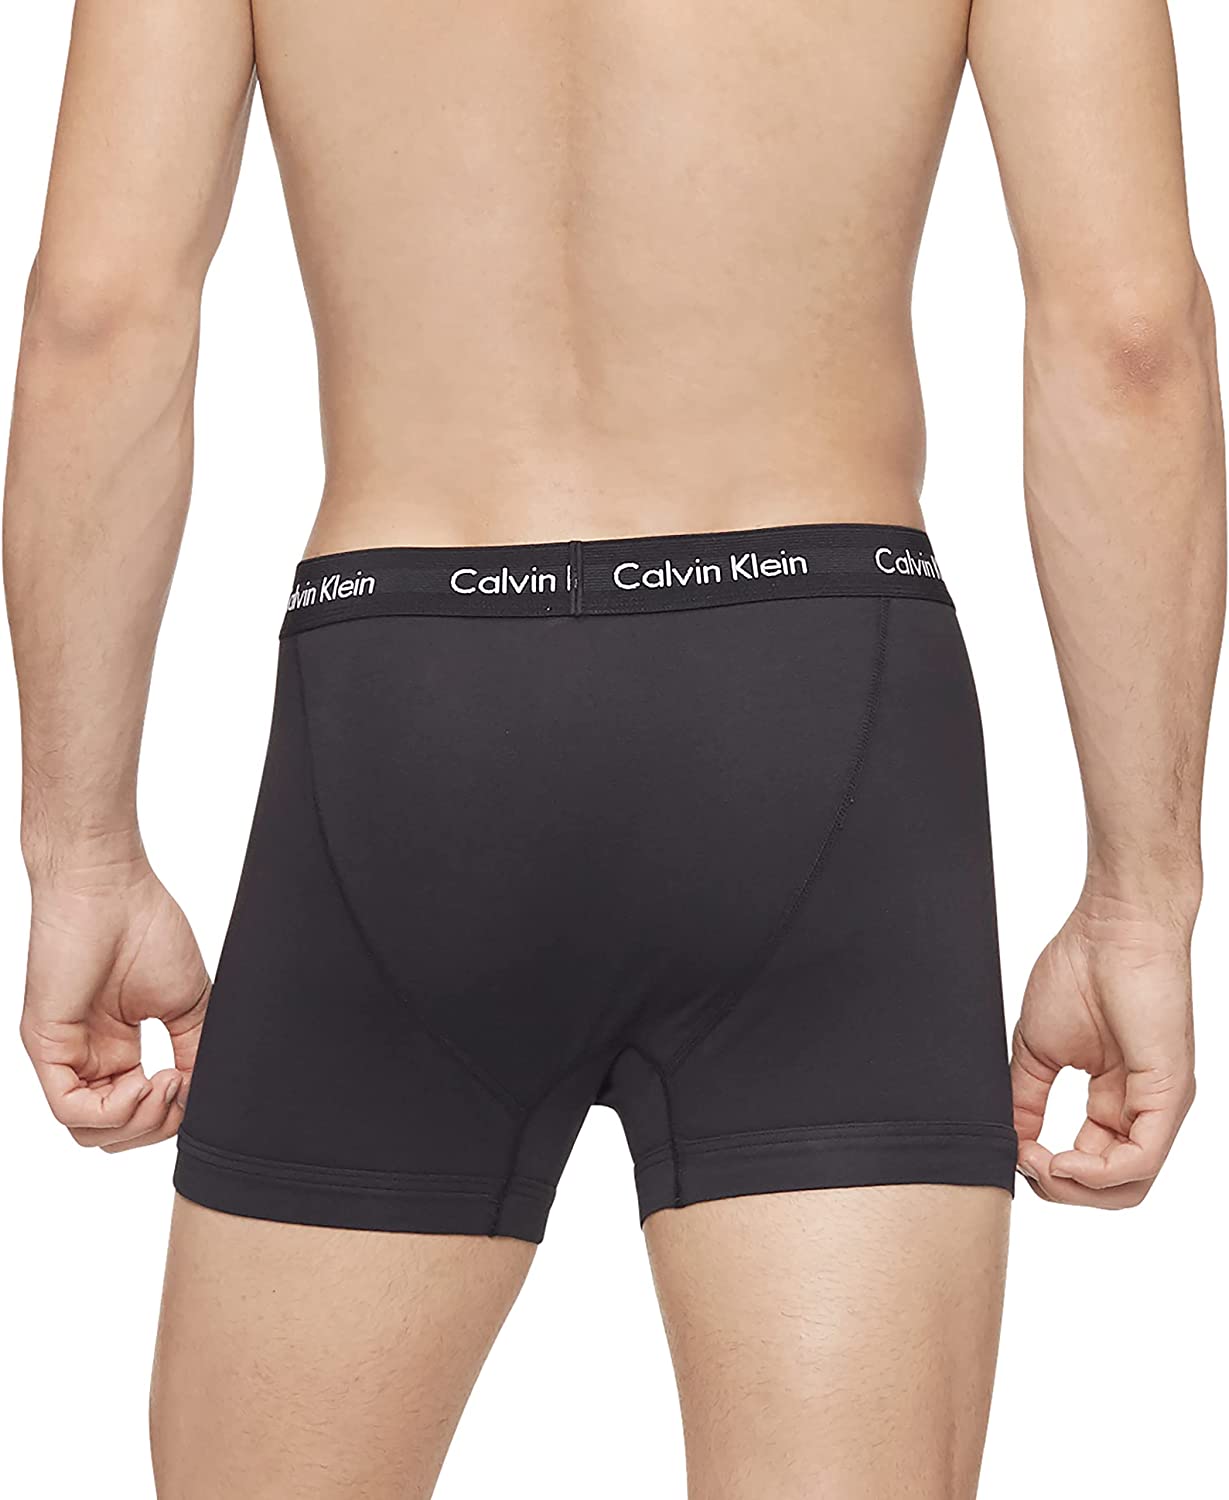 Calvin Klein Men's 3pk Cotton Knit Boxer Briefs Black Style NB4003